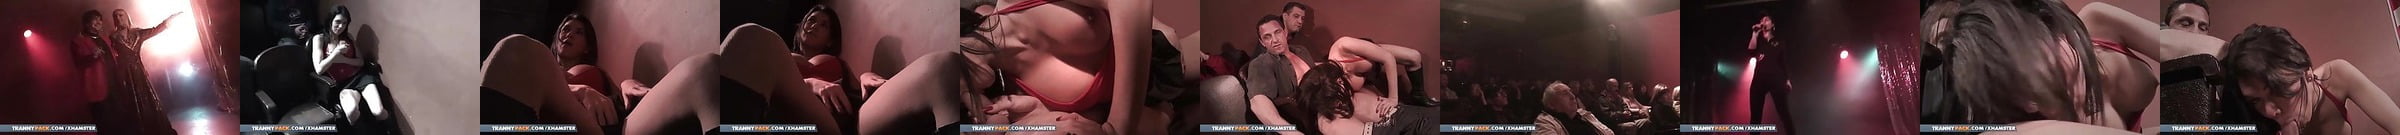 Peeping Tom Caught Ts Eve Stroking Her Bbc Tranny Porn 08 Xhamster